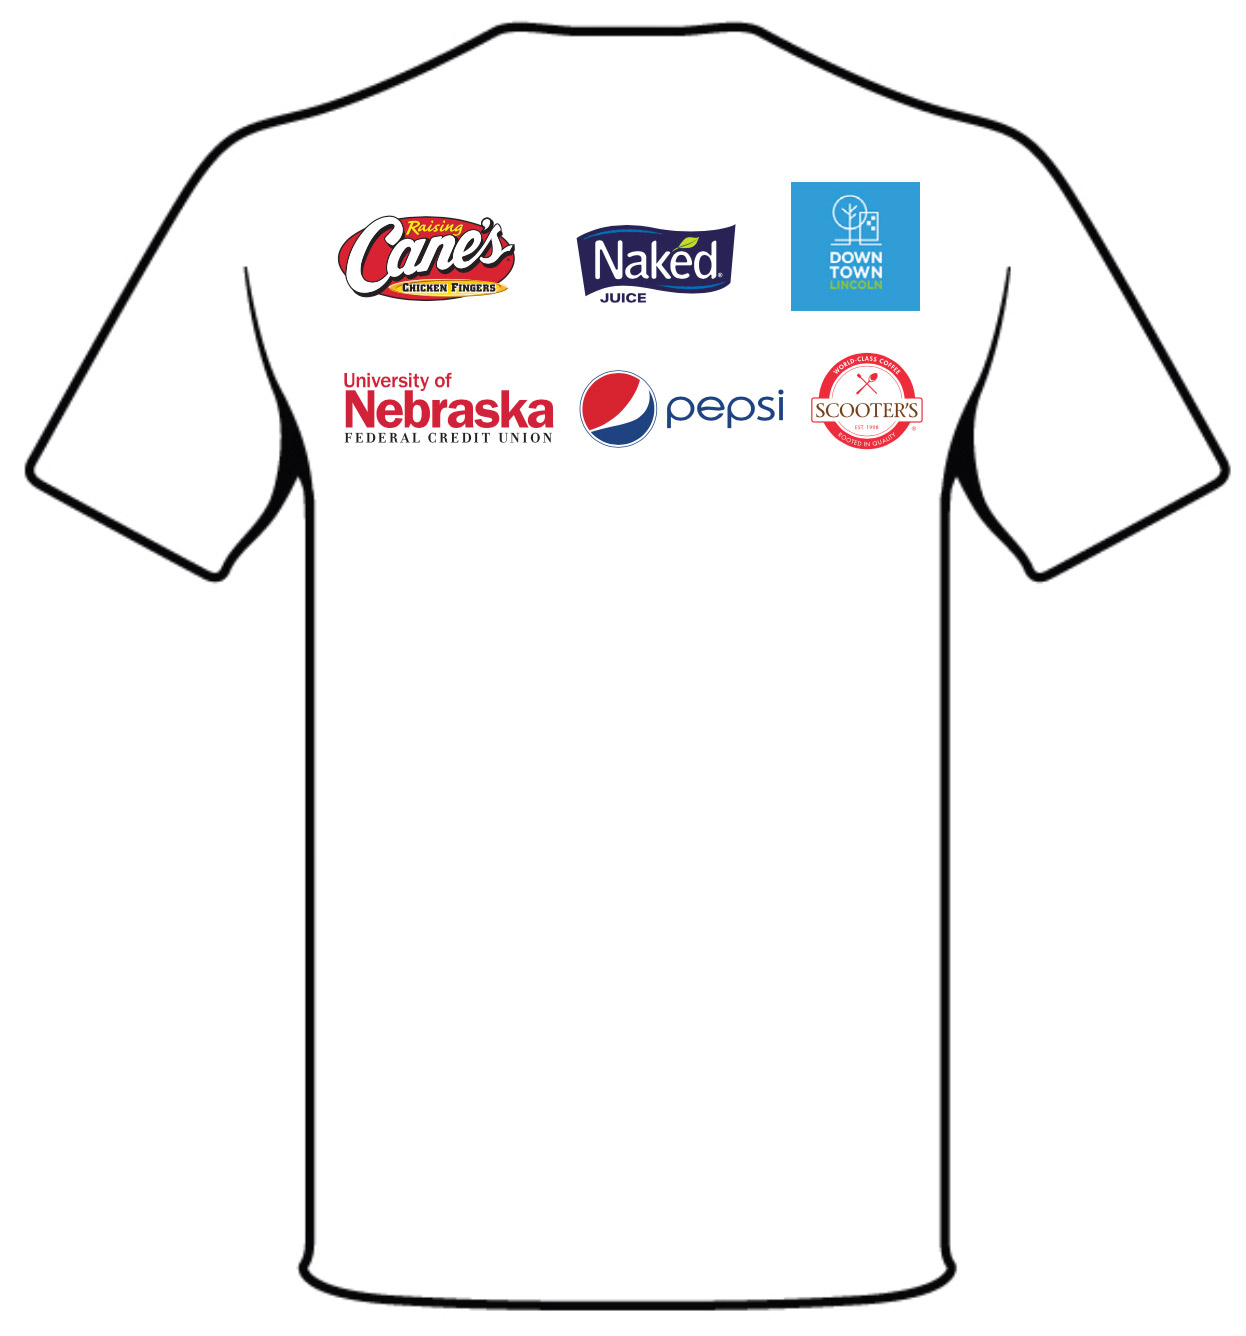 Back of t-shirt showing sponsor logos